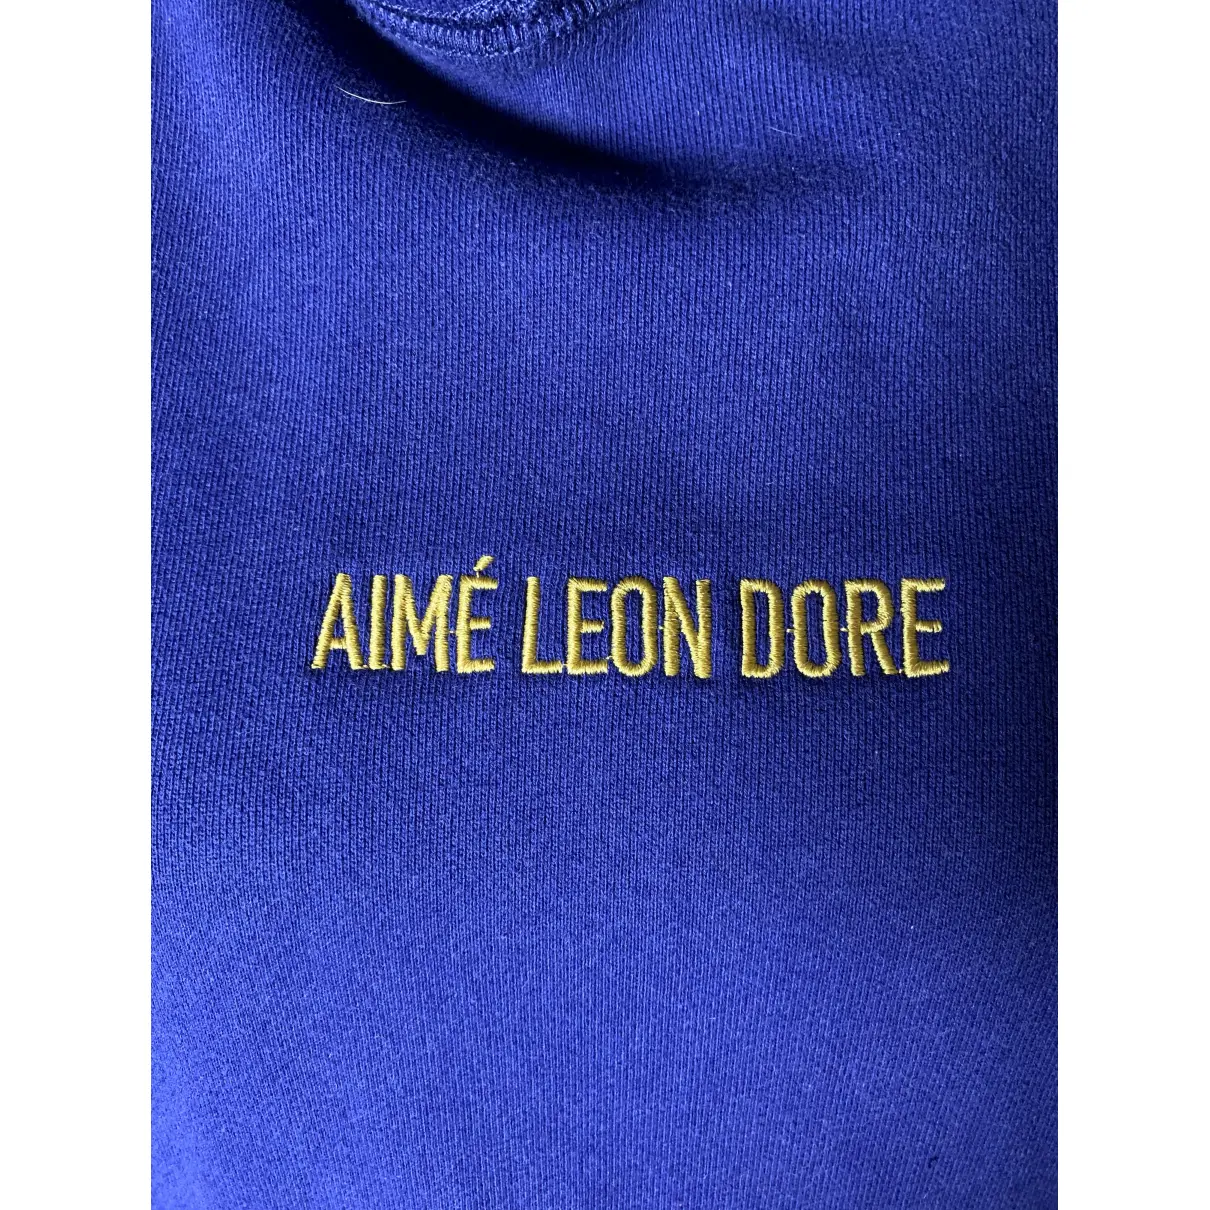 Buy Aime Leon Dore Shirt online